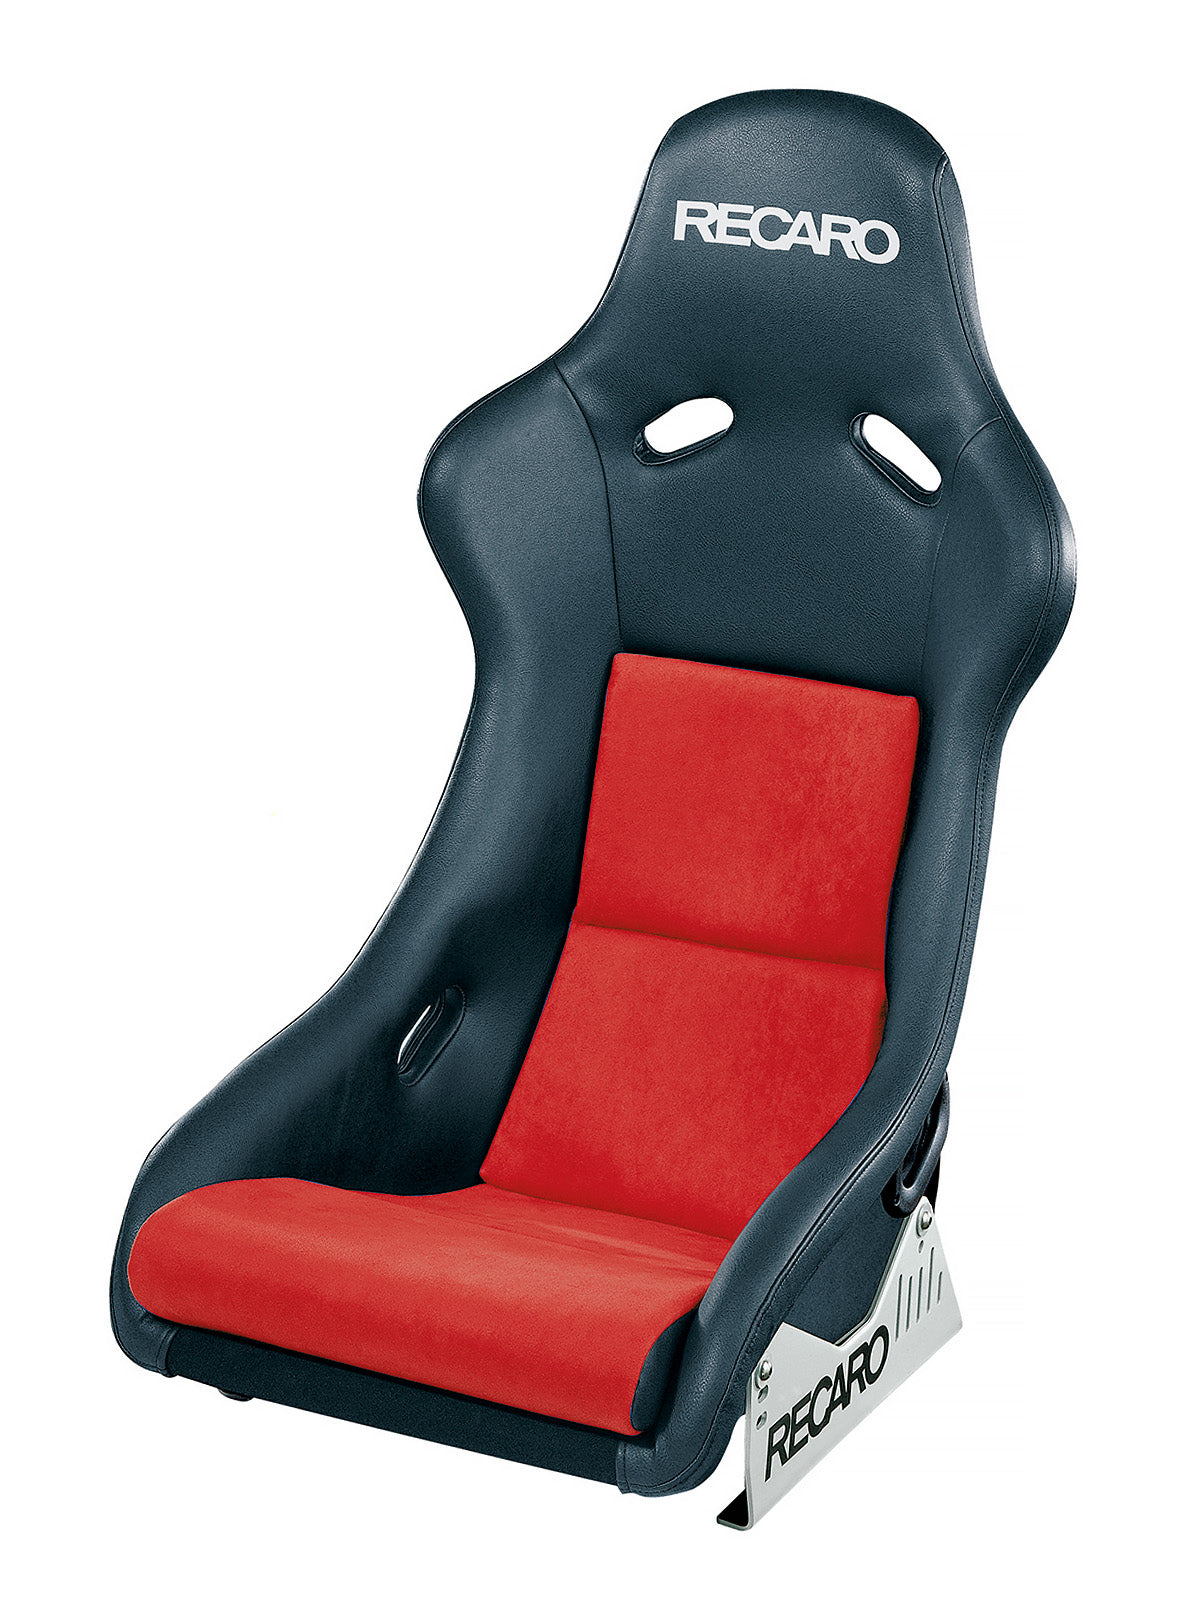 Recaro Pole Position (ABE) Racing Seat